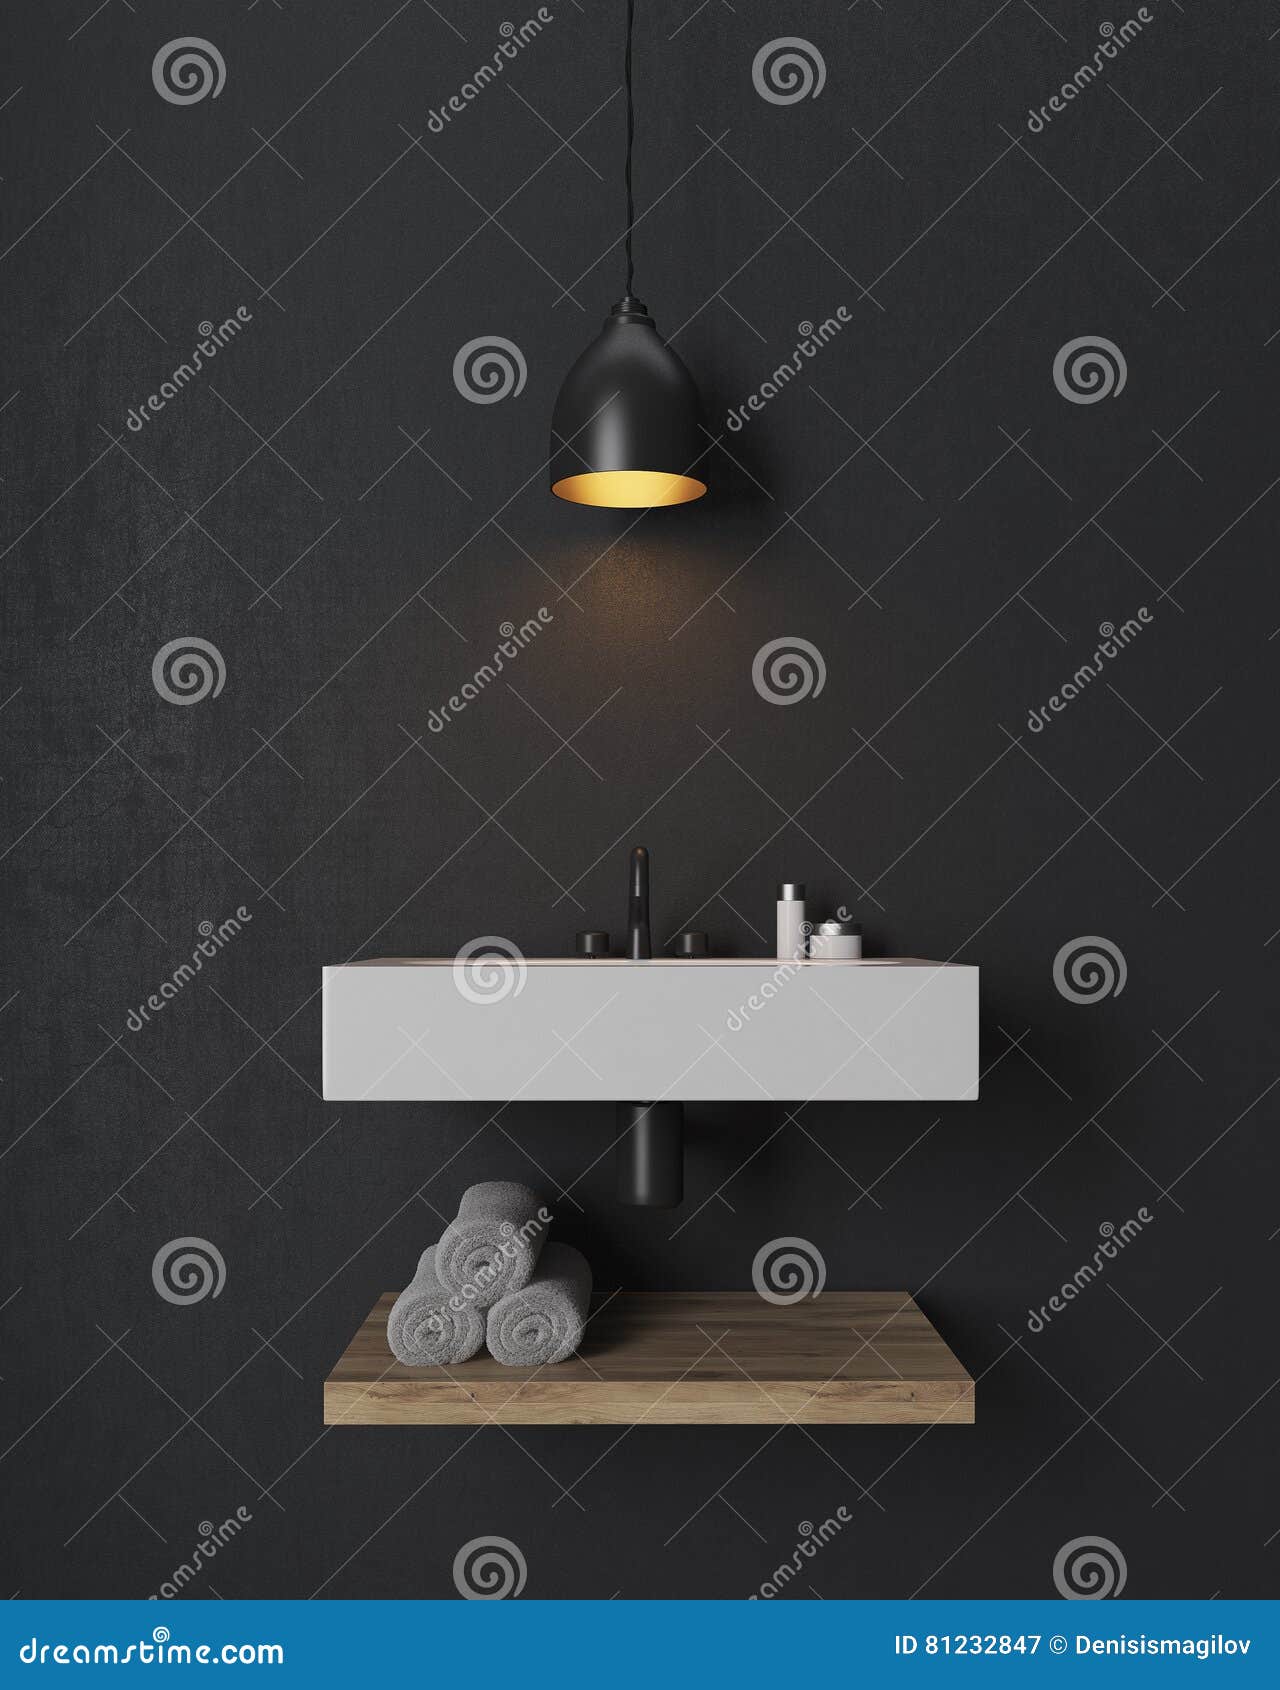 Bathroom Sink With Wooden Shelf Under It On Black Wall Stock